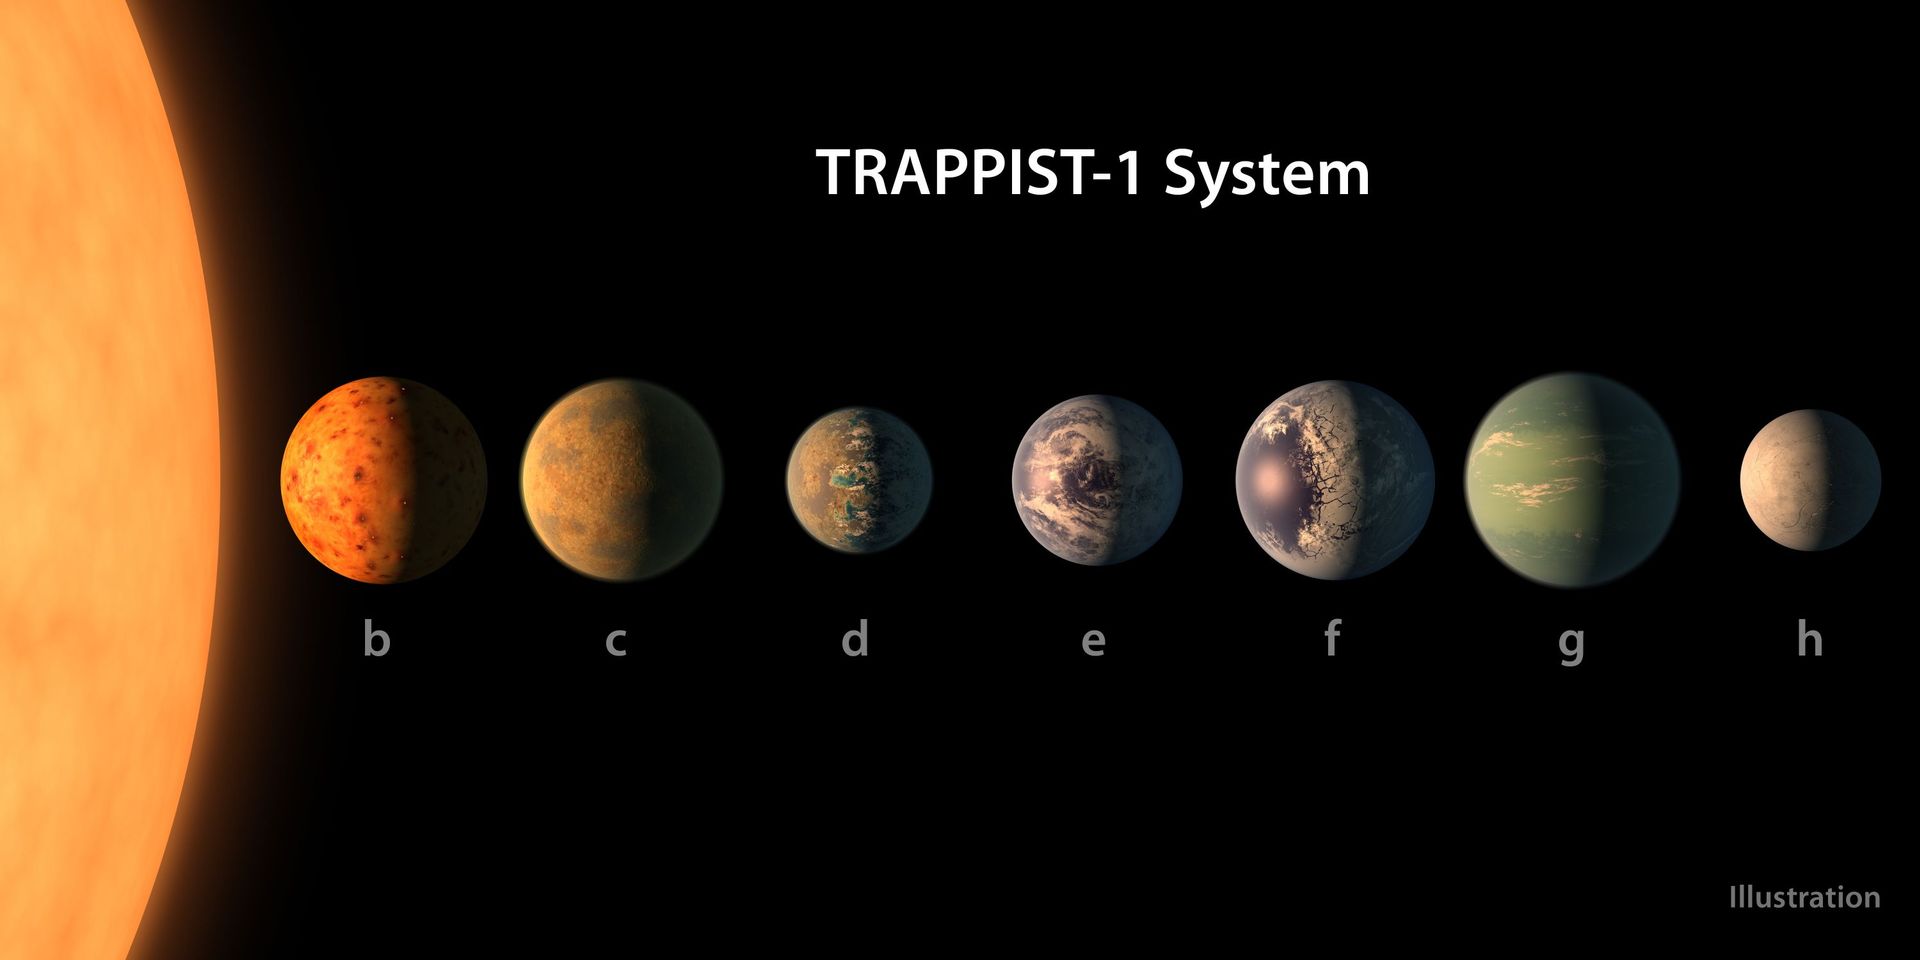 NASA Telescope Reveals Seven Earth-sized Planets Around Single Star TRAPPIST-1